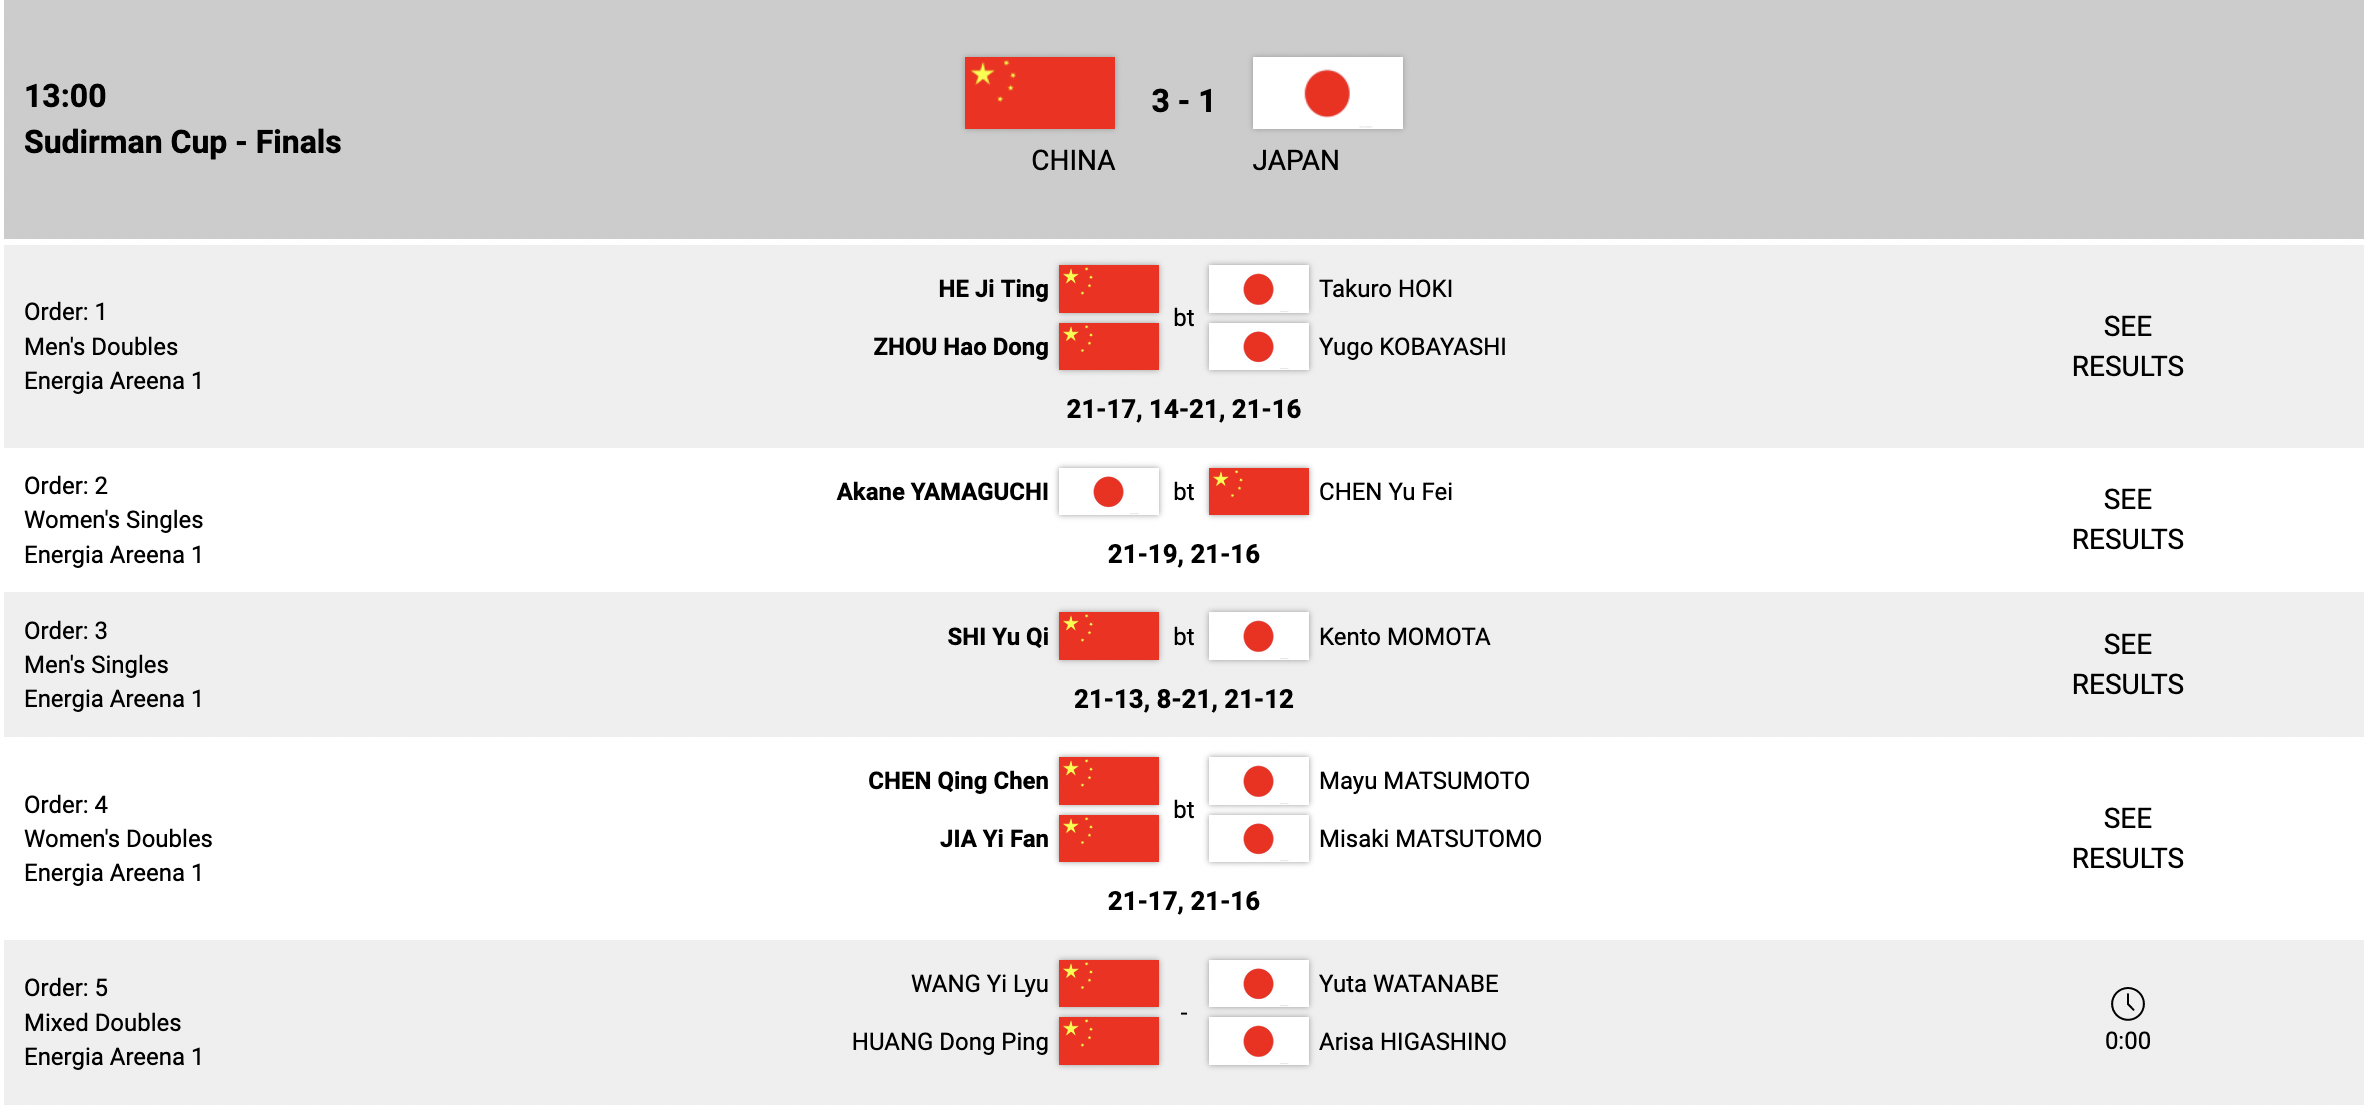 Malaysia vs japan sudirman cup result